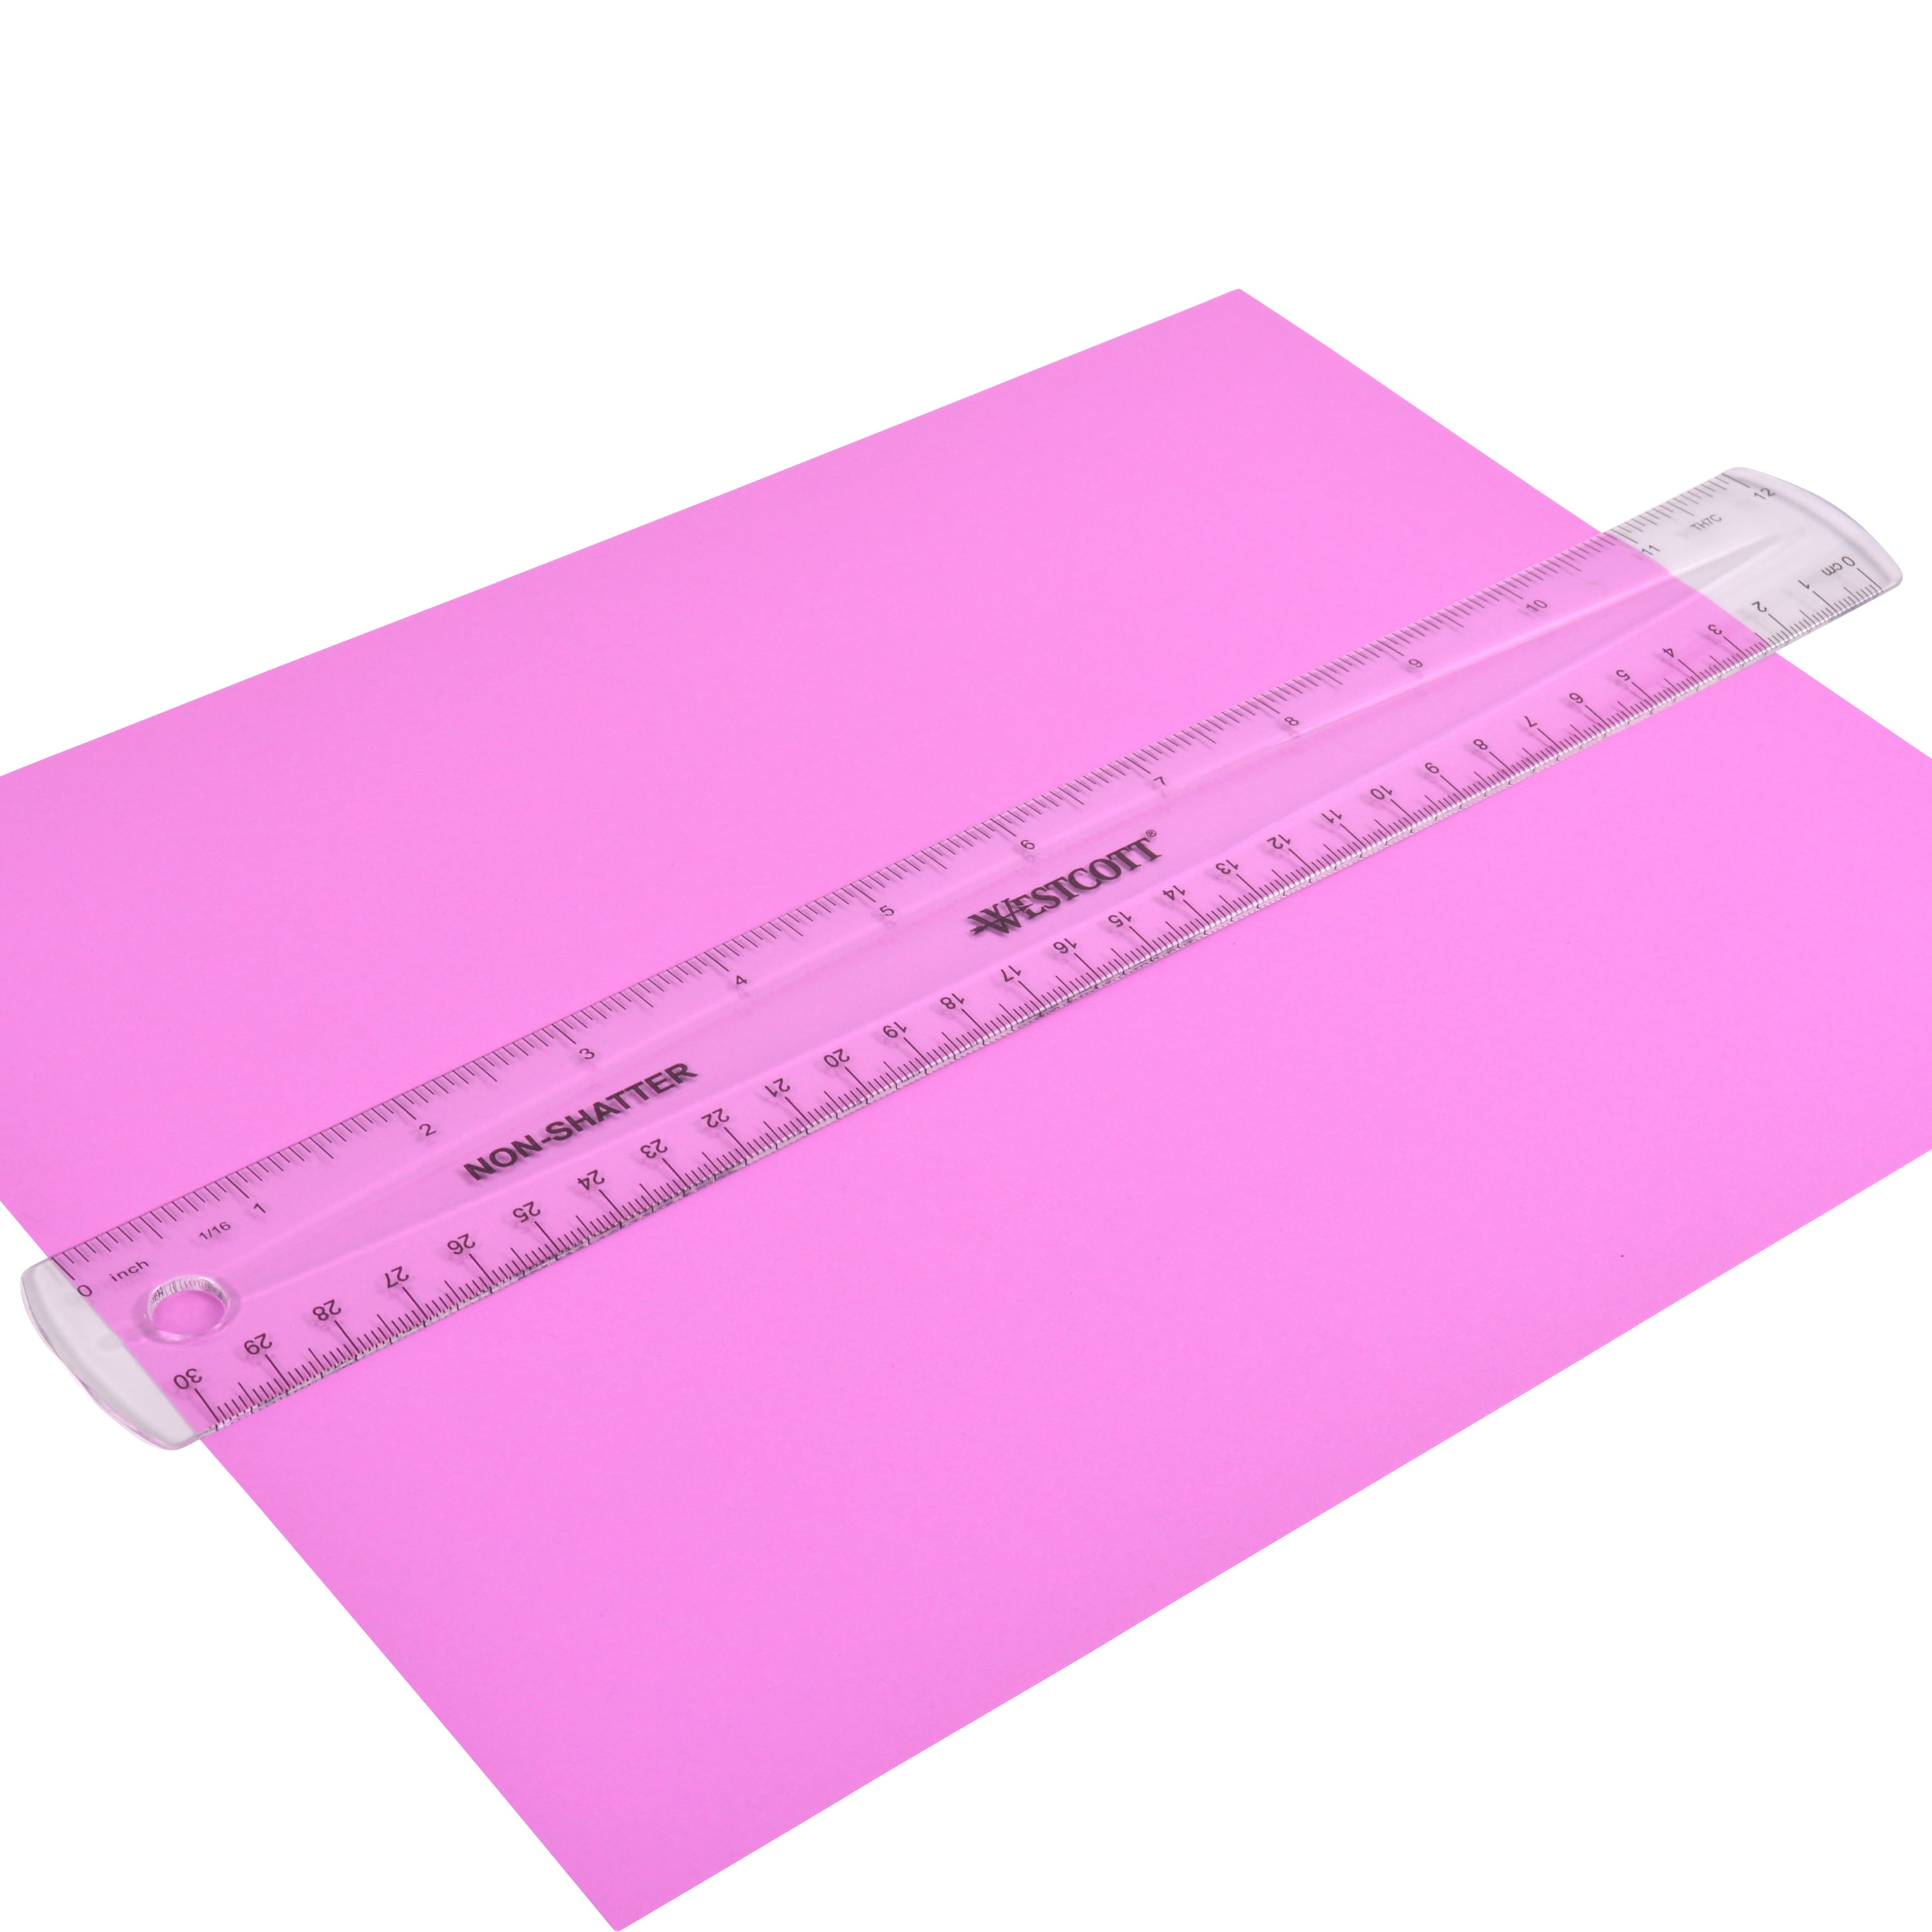 Assorted Westcott® Translucent Shatterproof Ruler